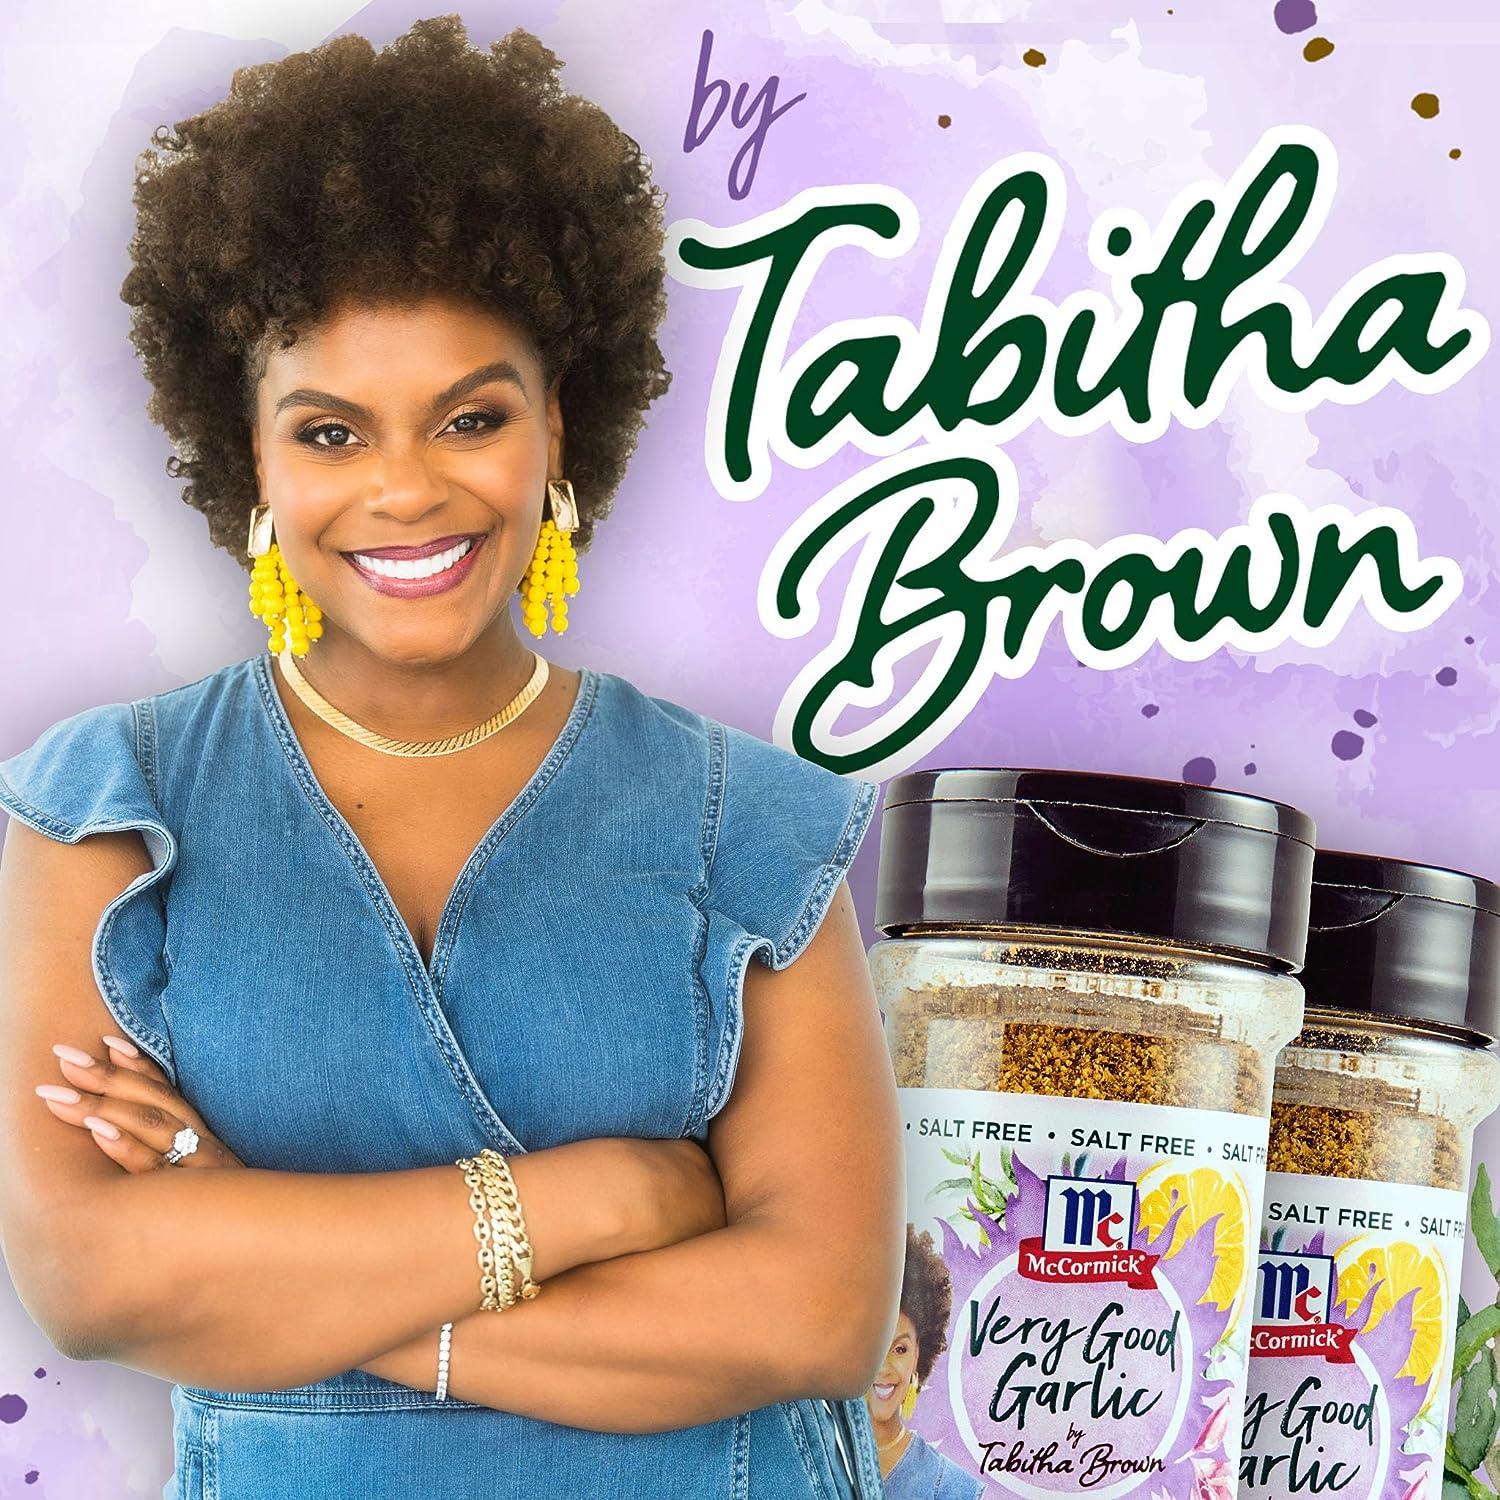 McCormick All Purpose Seasoning by Tabitha Brown Variety Pack, 14.62 oz ...